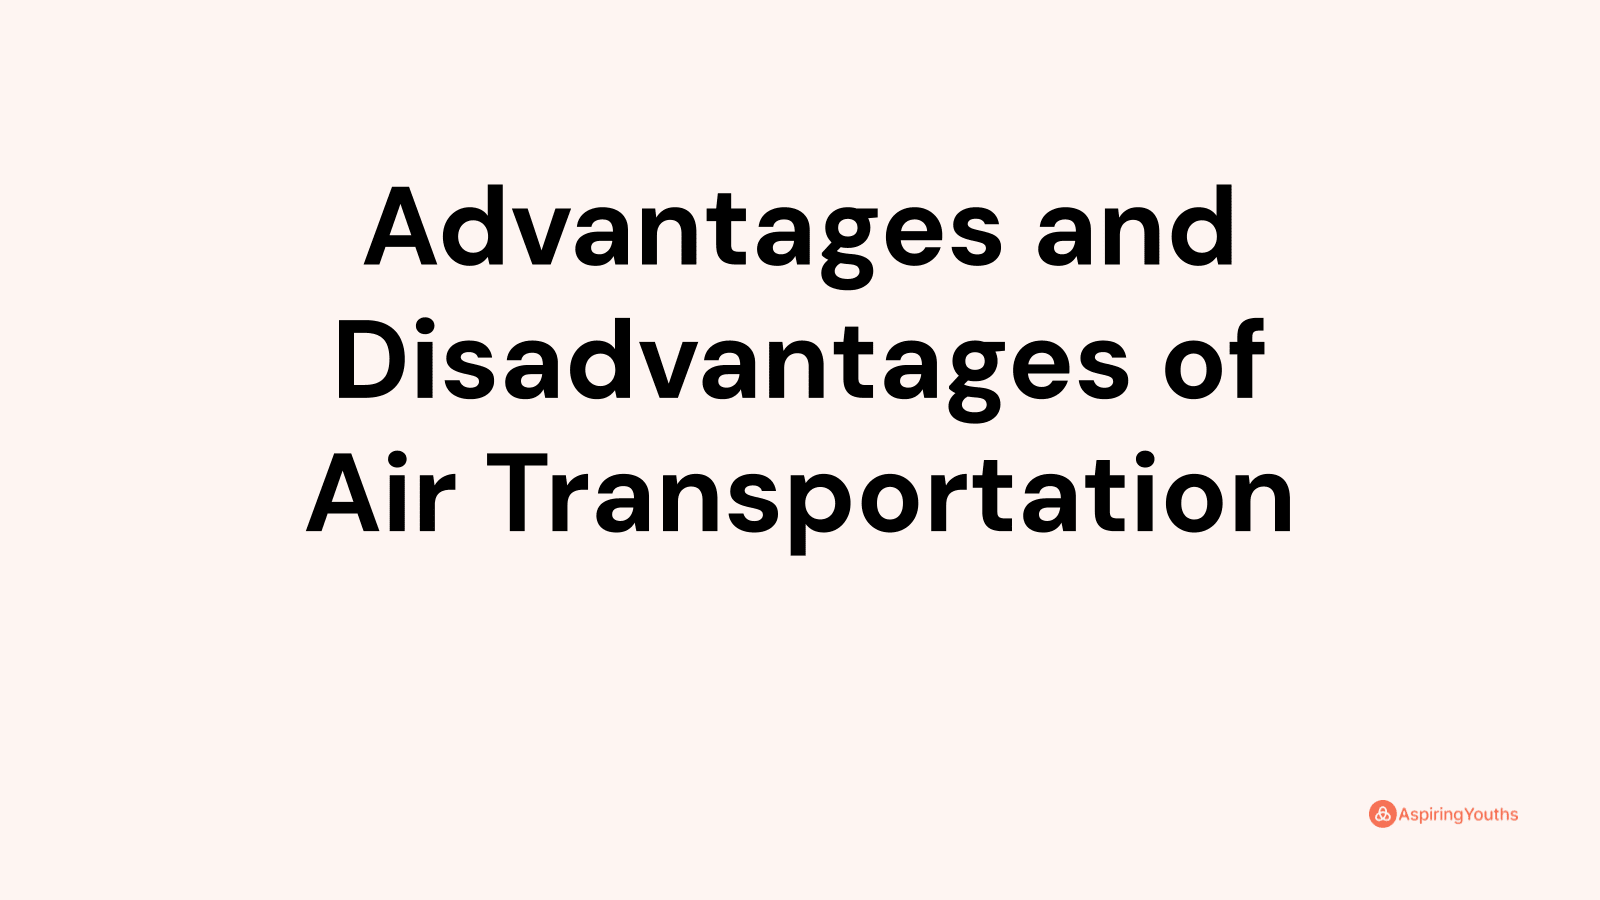 Advantages and disadvantages of Air Transportation